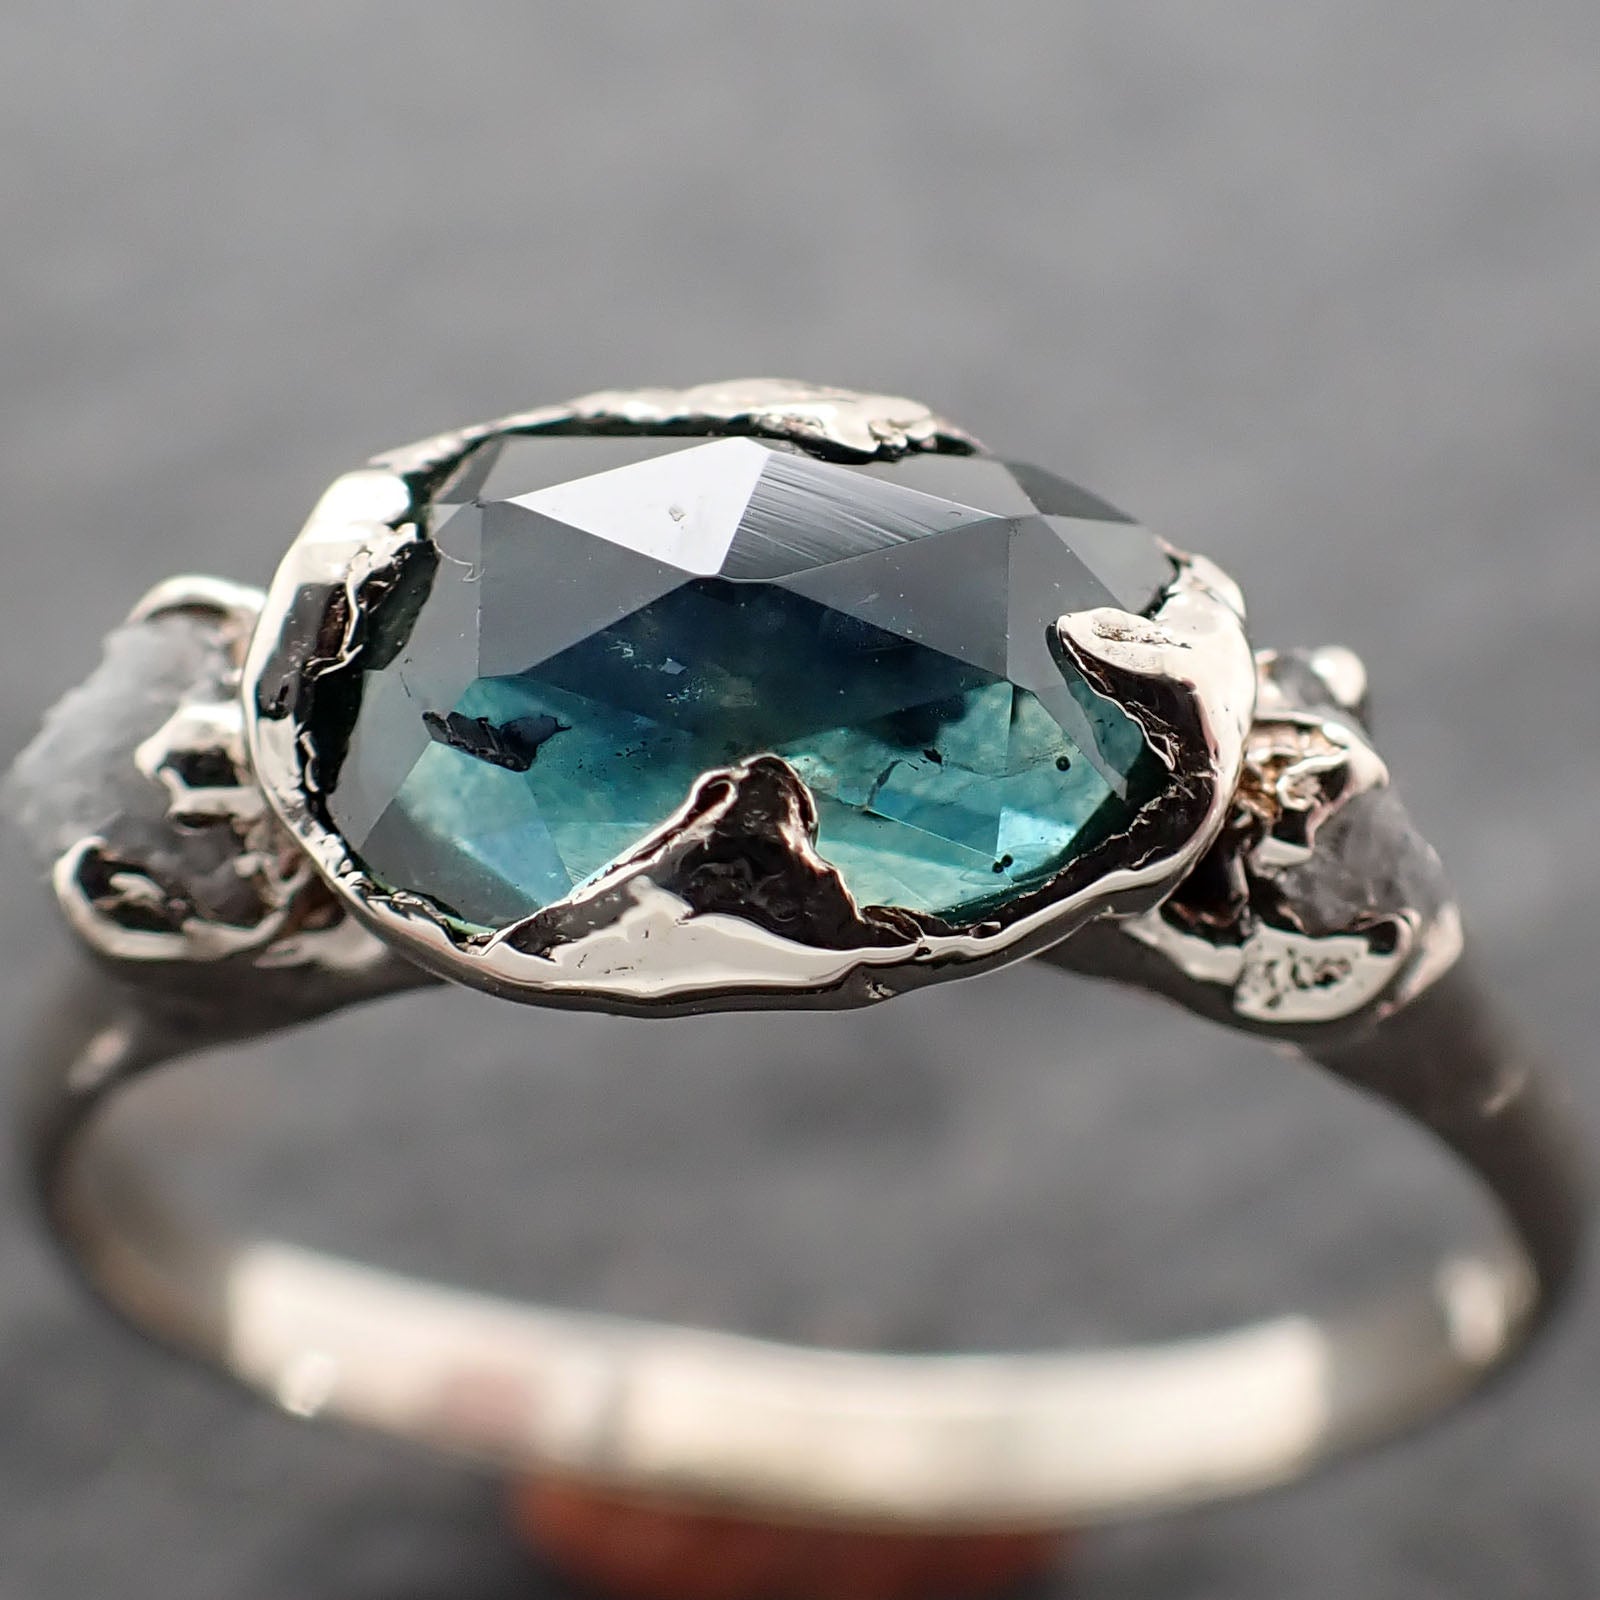 fancy cut montana sapphire diamond 14k white gold engagement ring wedding ring blue gemstone ring multi stone ring 2649 Alternative Engagement